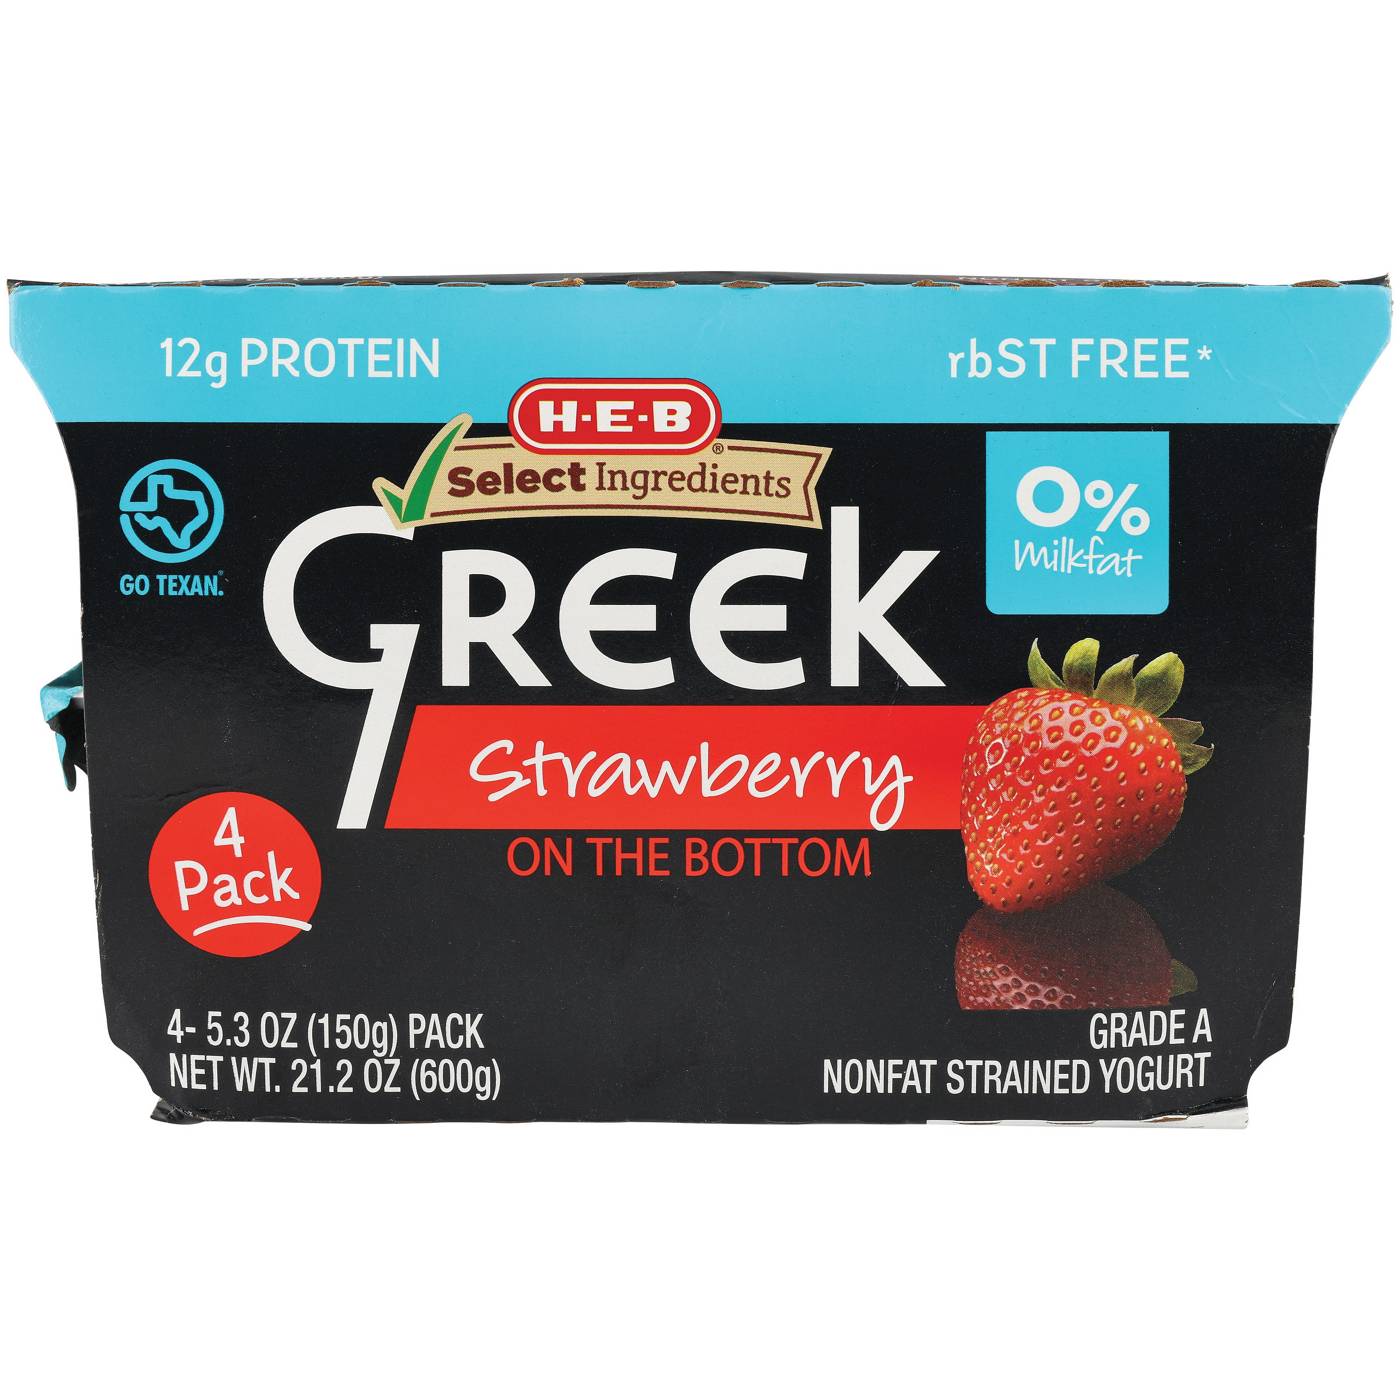 H-E-B 12g Protein Nonfat Greek Yogurt - Strawberry on the Bottom; image 1 of 2